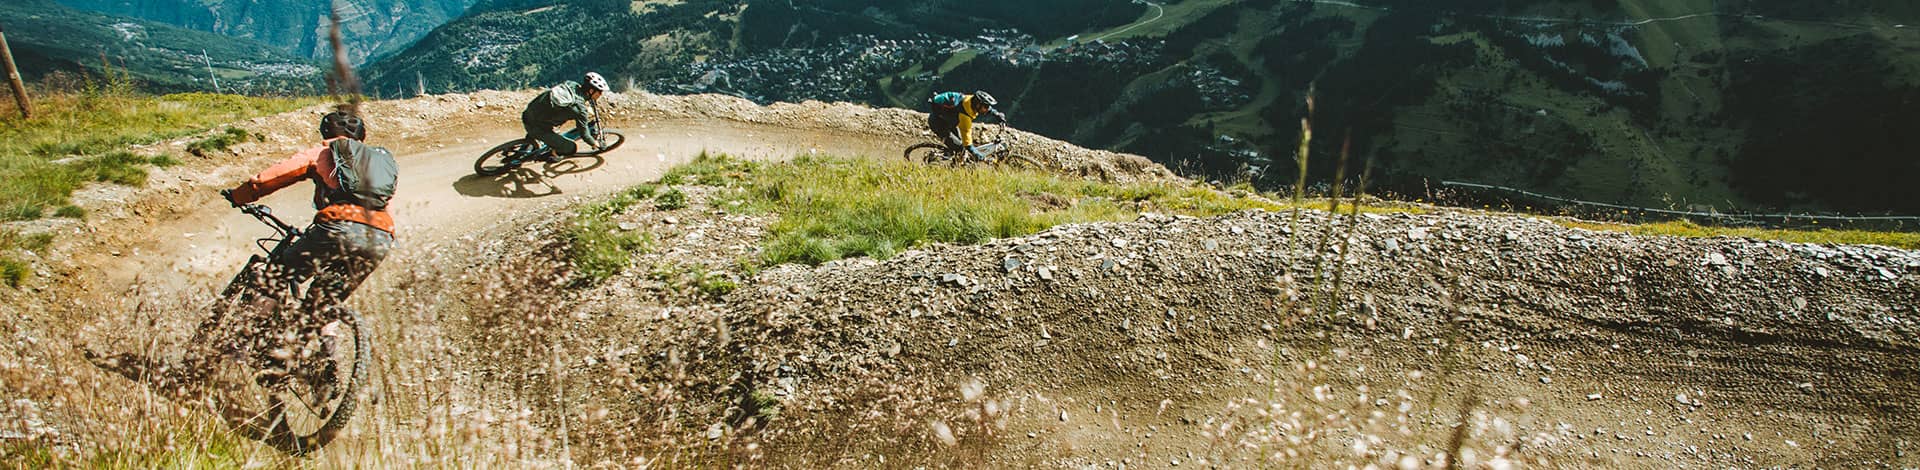 Ride a whole summer season in Les 3 Vallées thanks to the MTB season pass